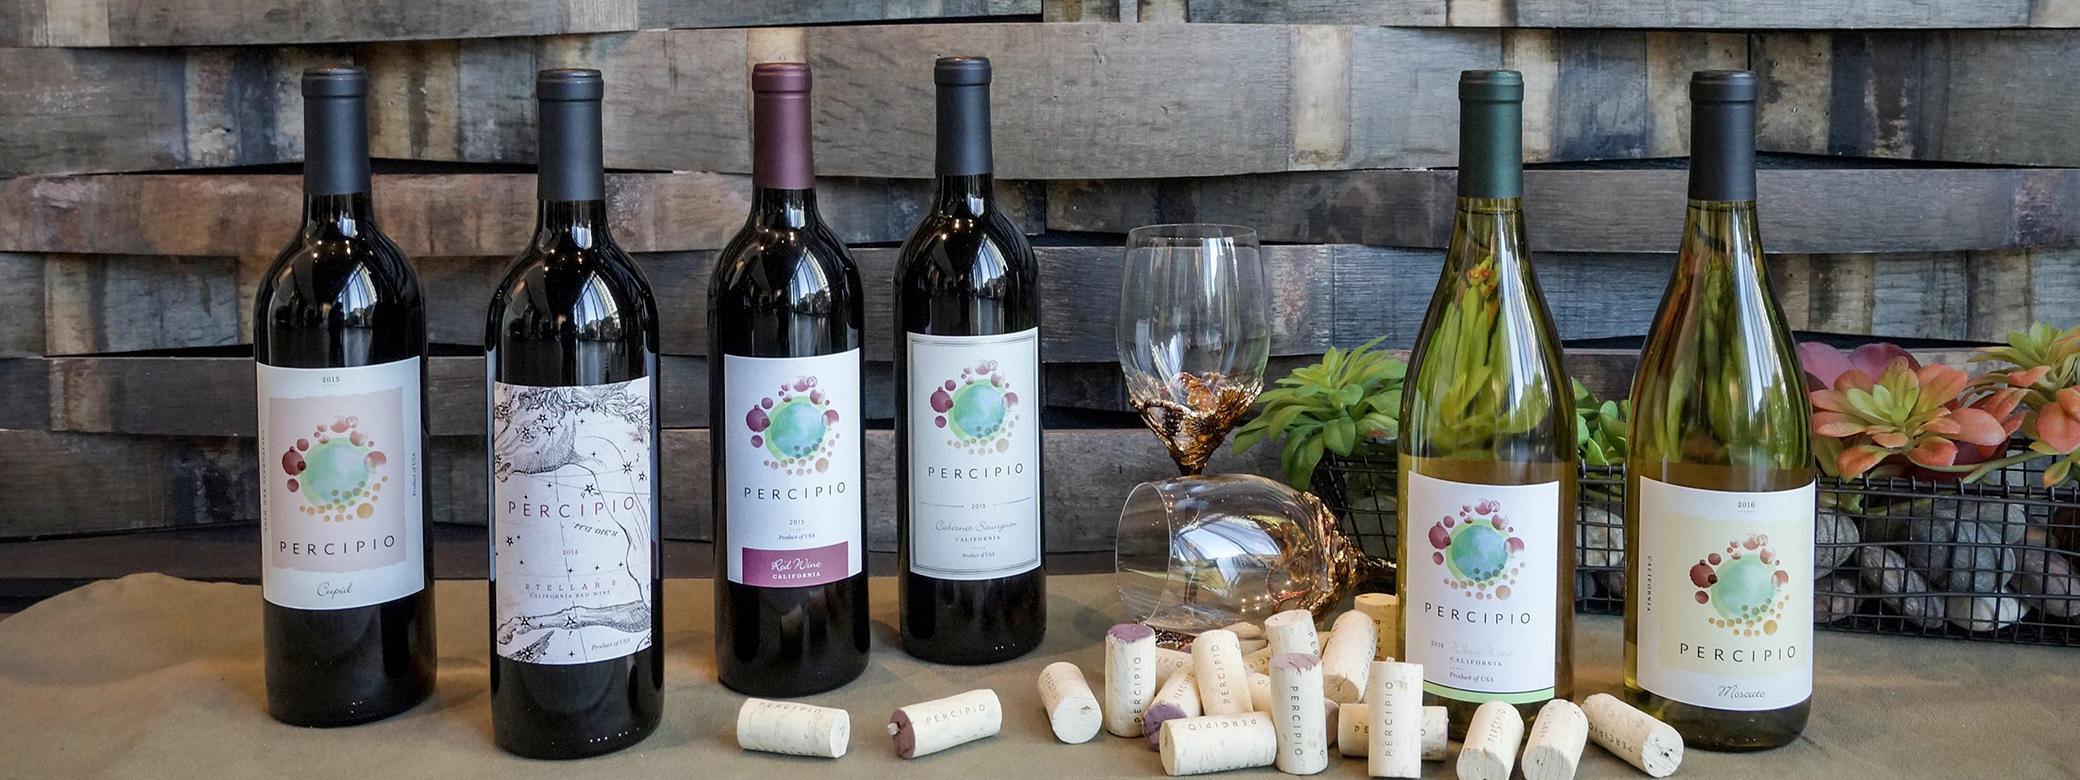 row of six bottles of Percipio wine